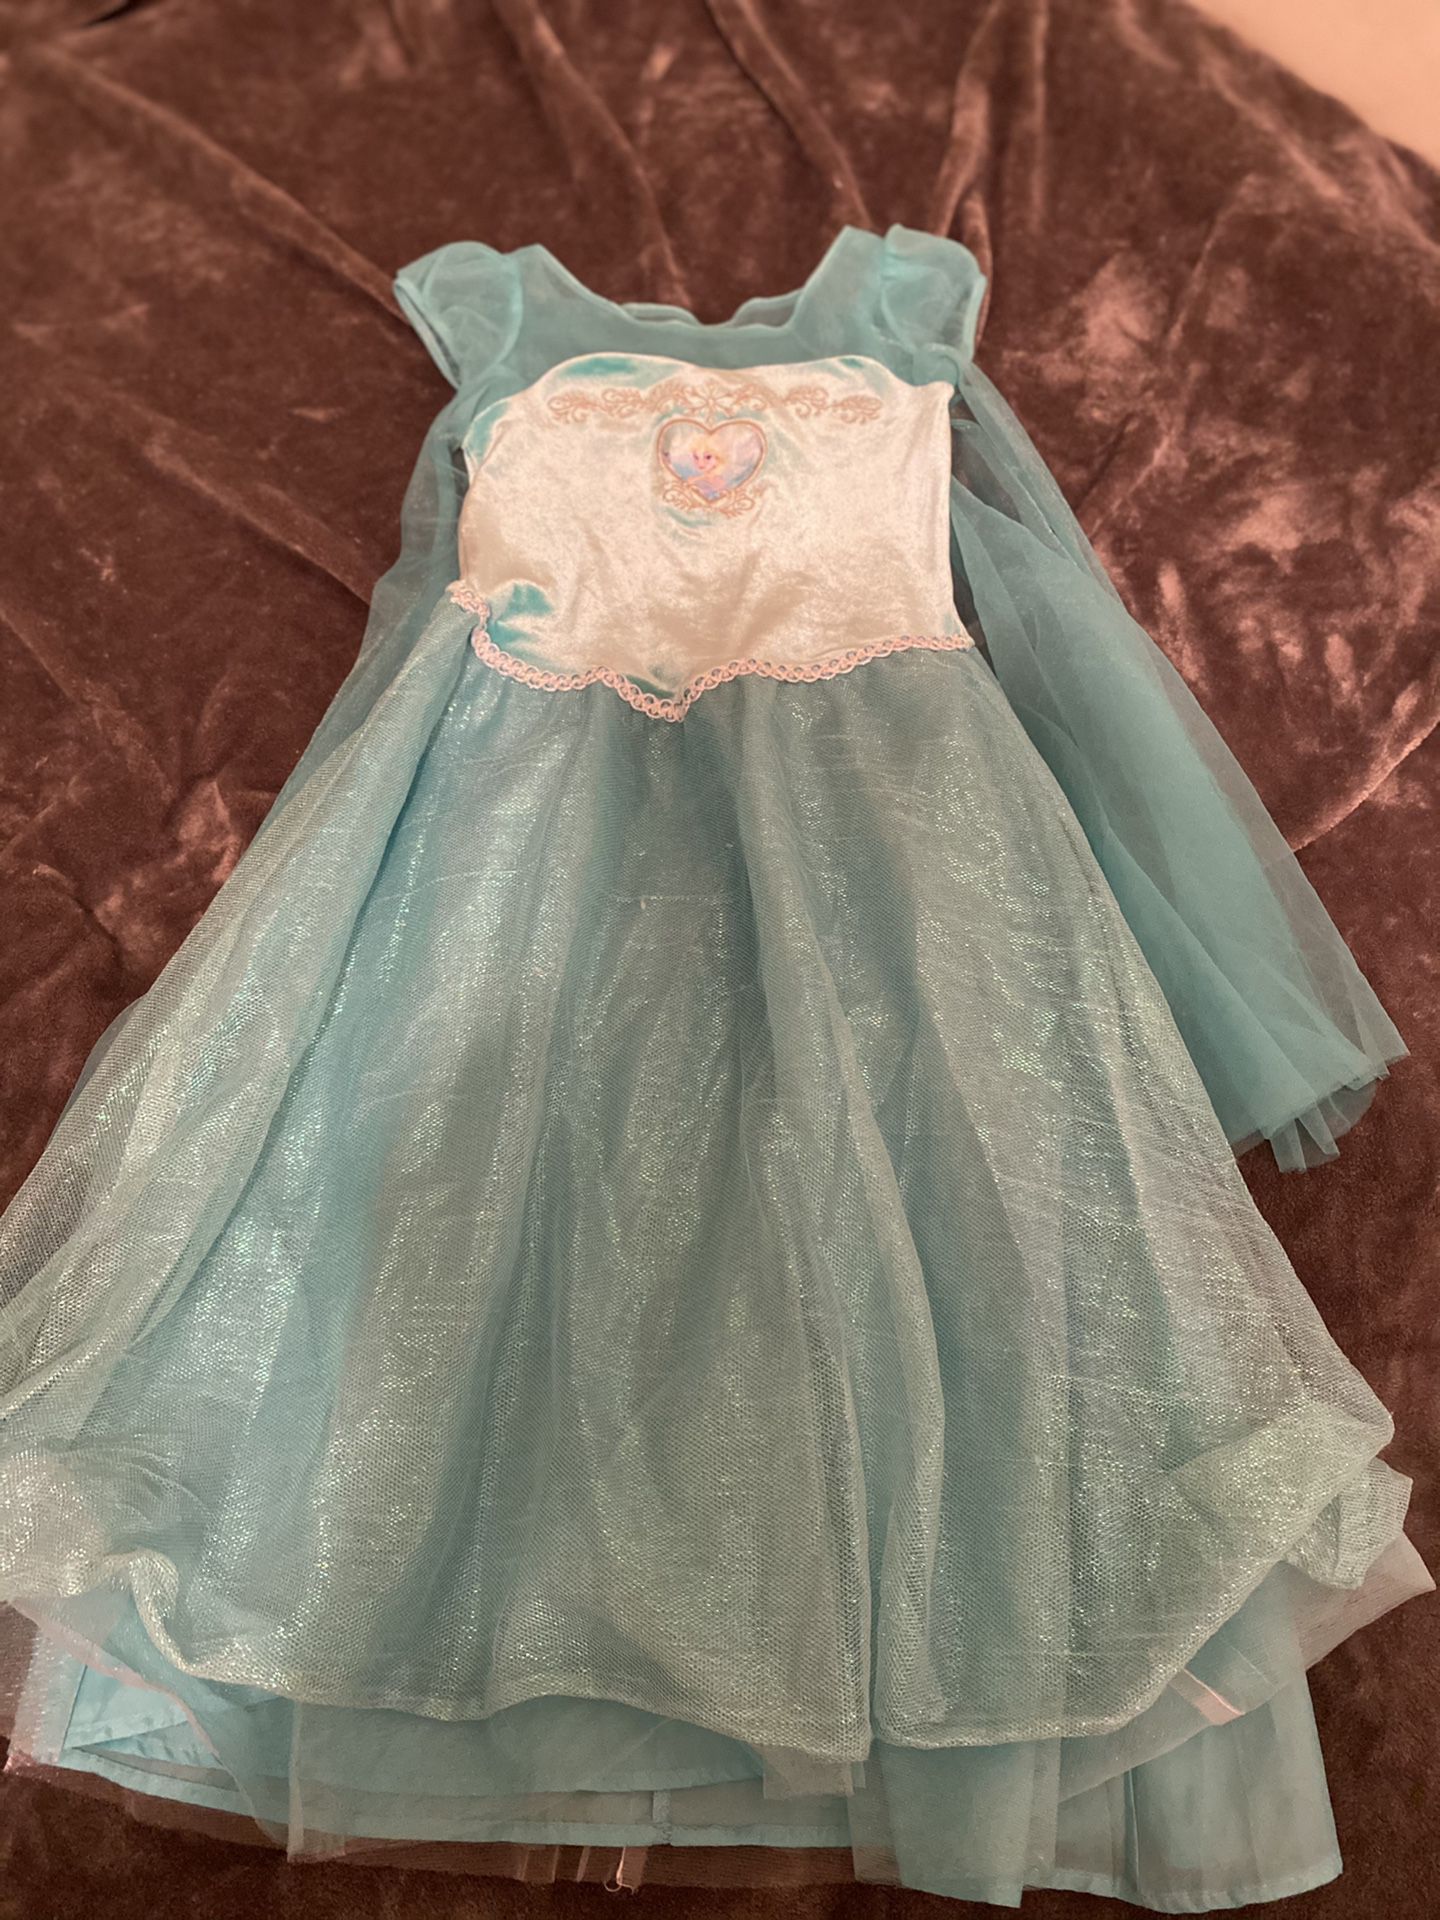 Disney’s Frozen Elsa dress